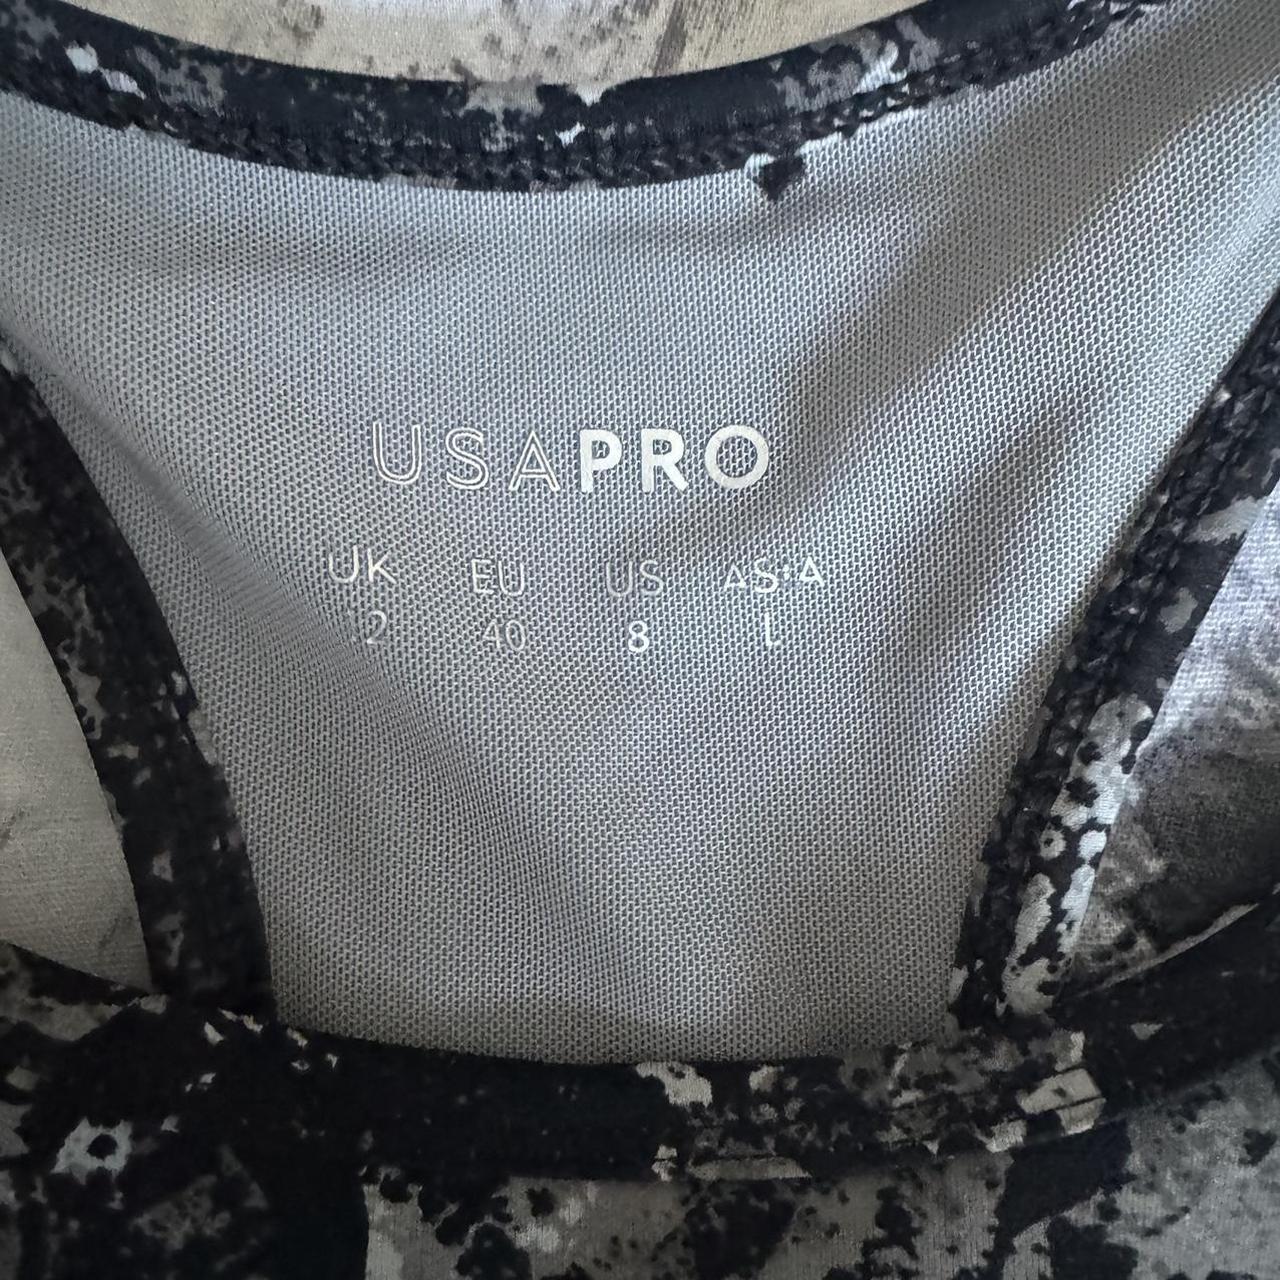 USA PRO Sports Bra. Size 12 UK. Only been worn - Depop